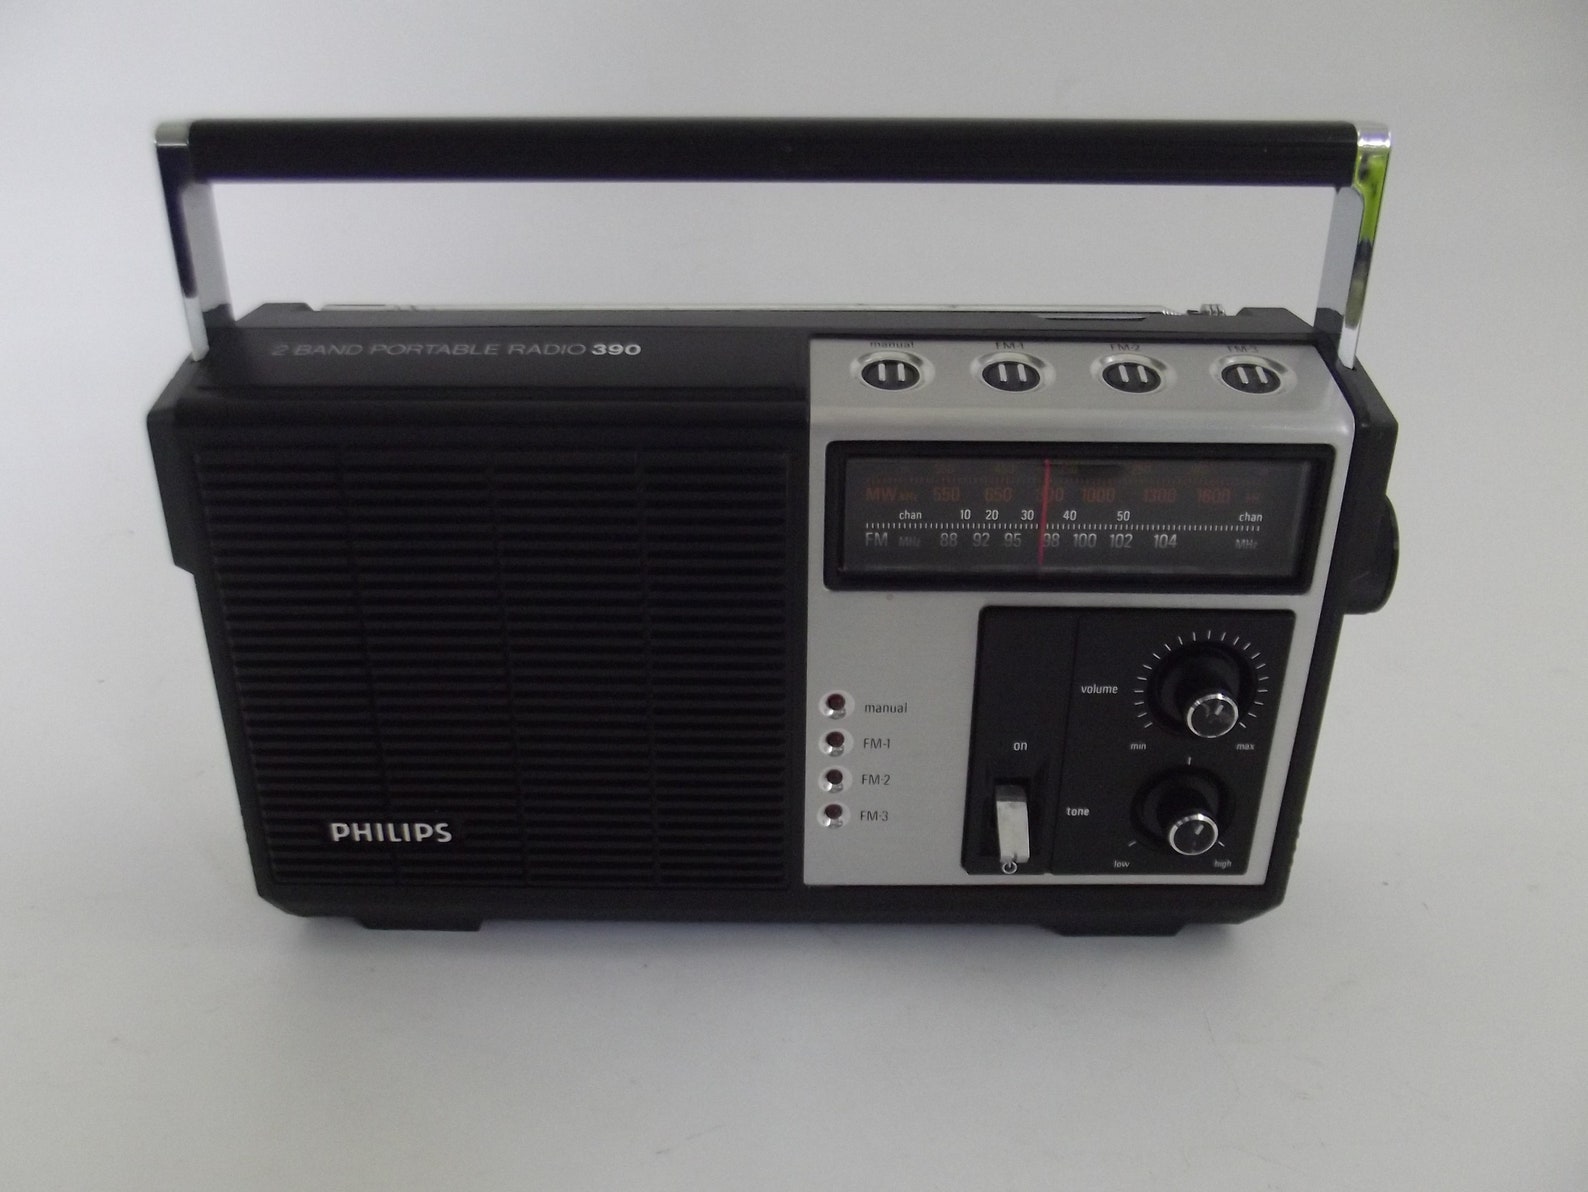 Philips radio 2 band portable radio model 390 MW FM | Etsy